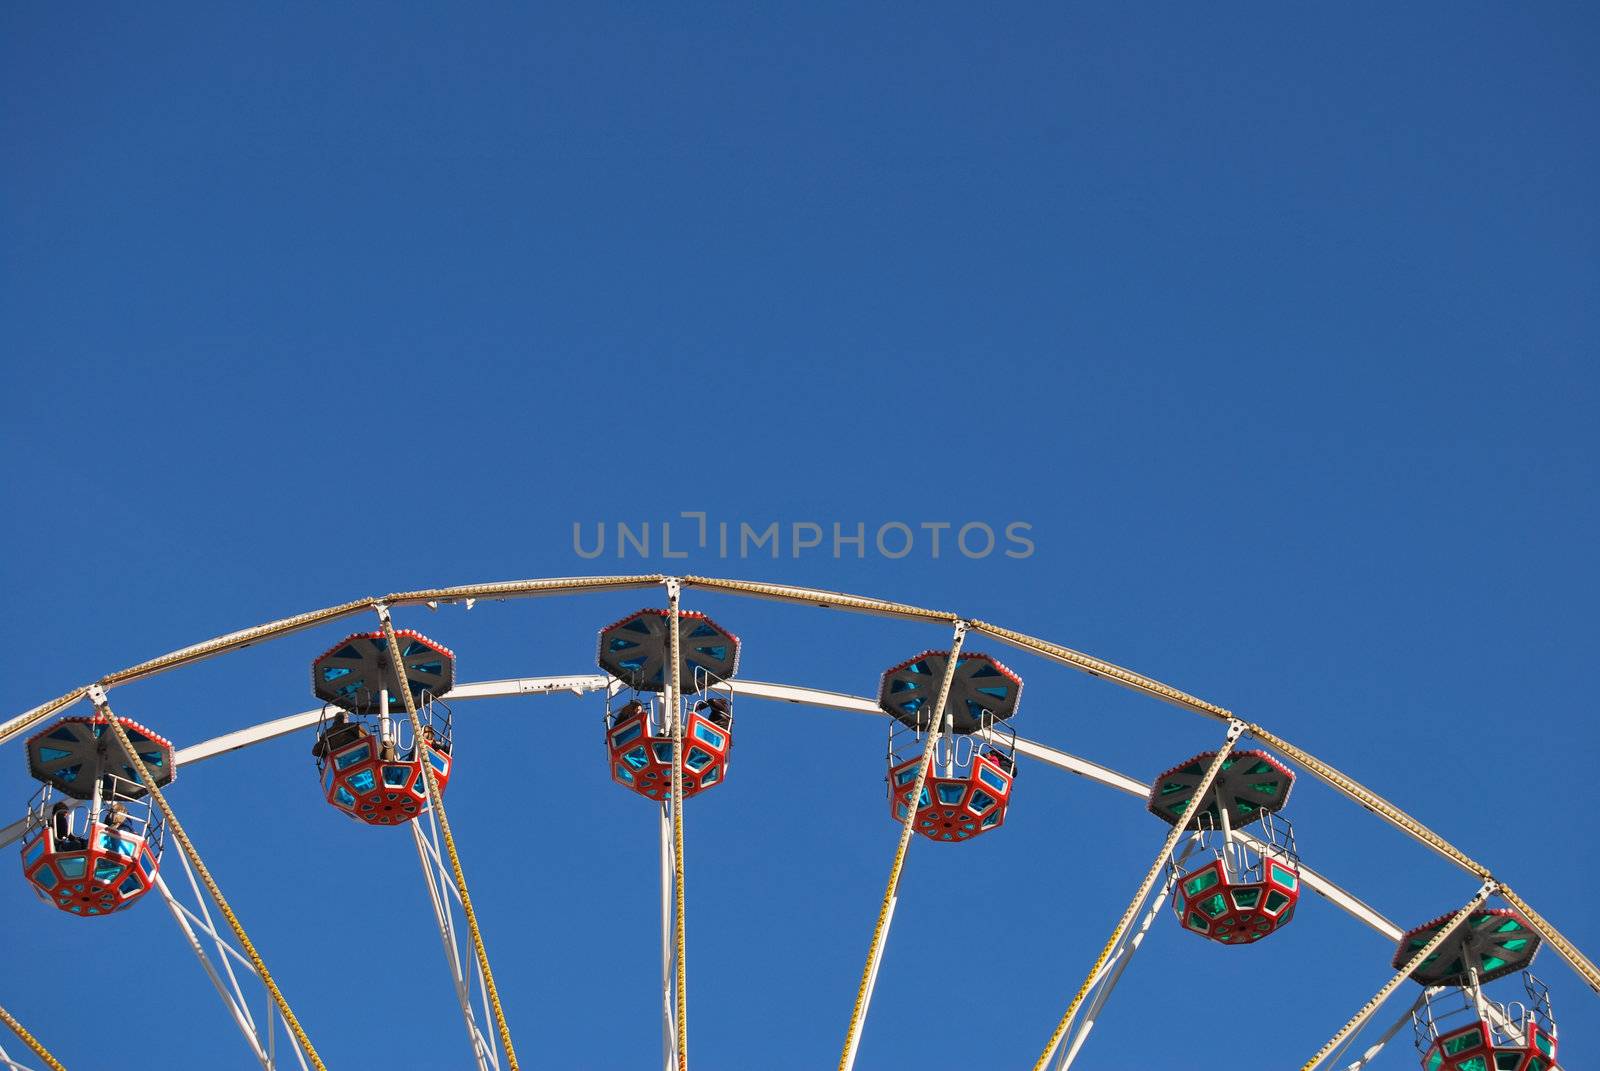 carousel and blue sky